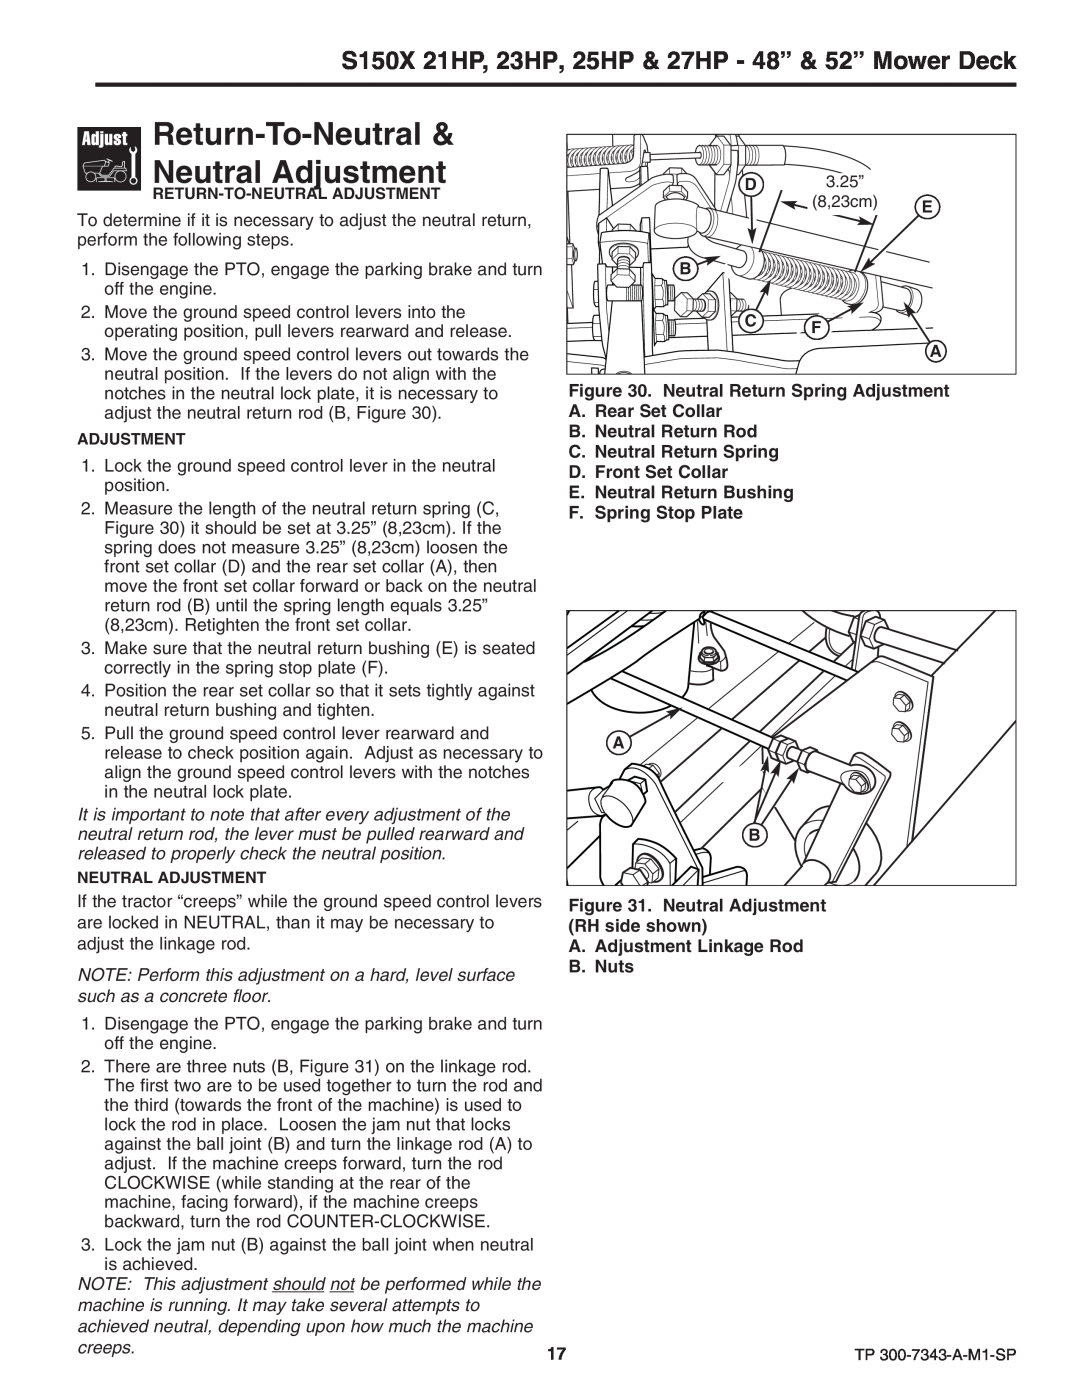 Snapper manual Return-To-Neutral & Neutral Adjustment, S150X 21HP, 23HP, 25HP & 27HP - 48” & 52” Mower Deck, 8,23cm 